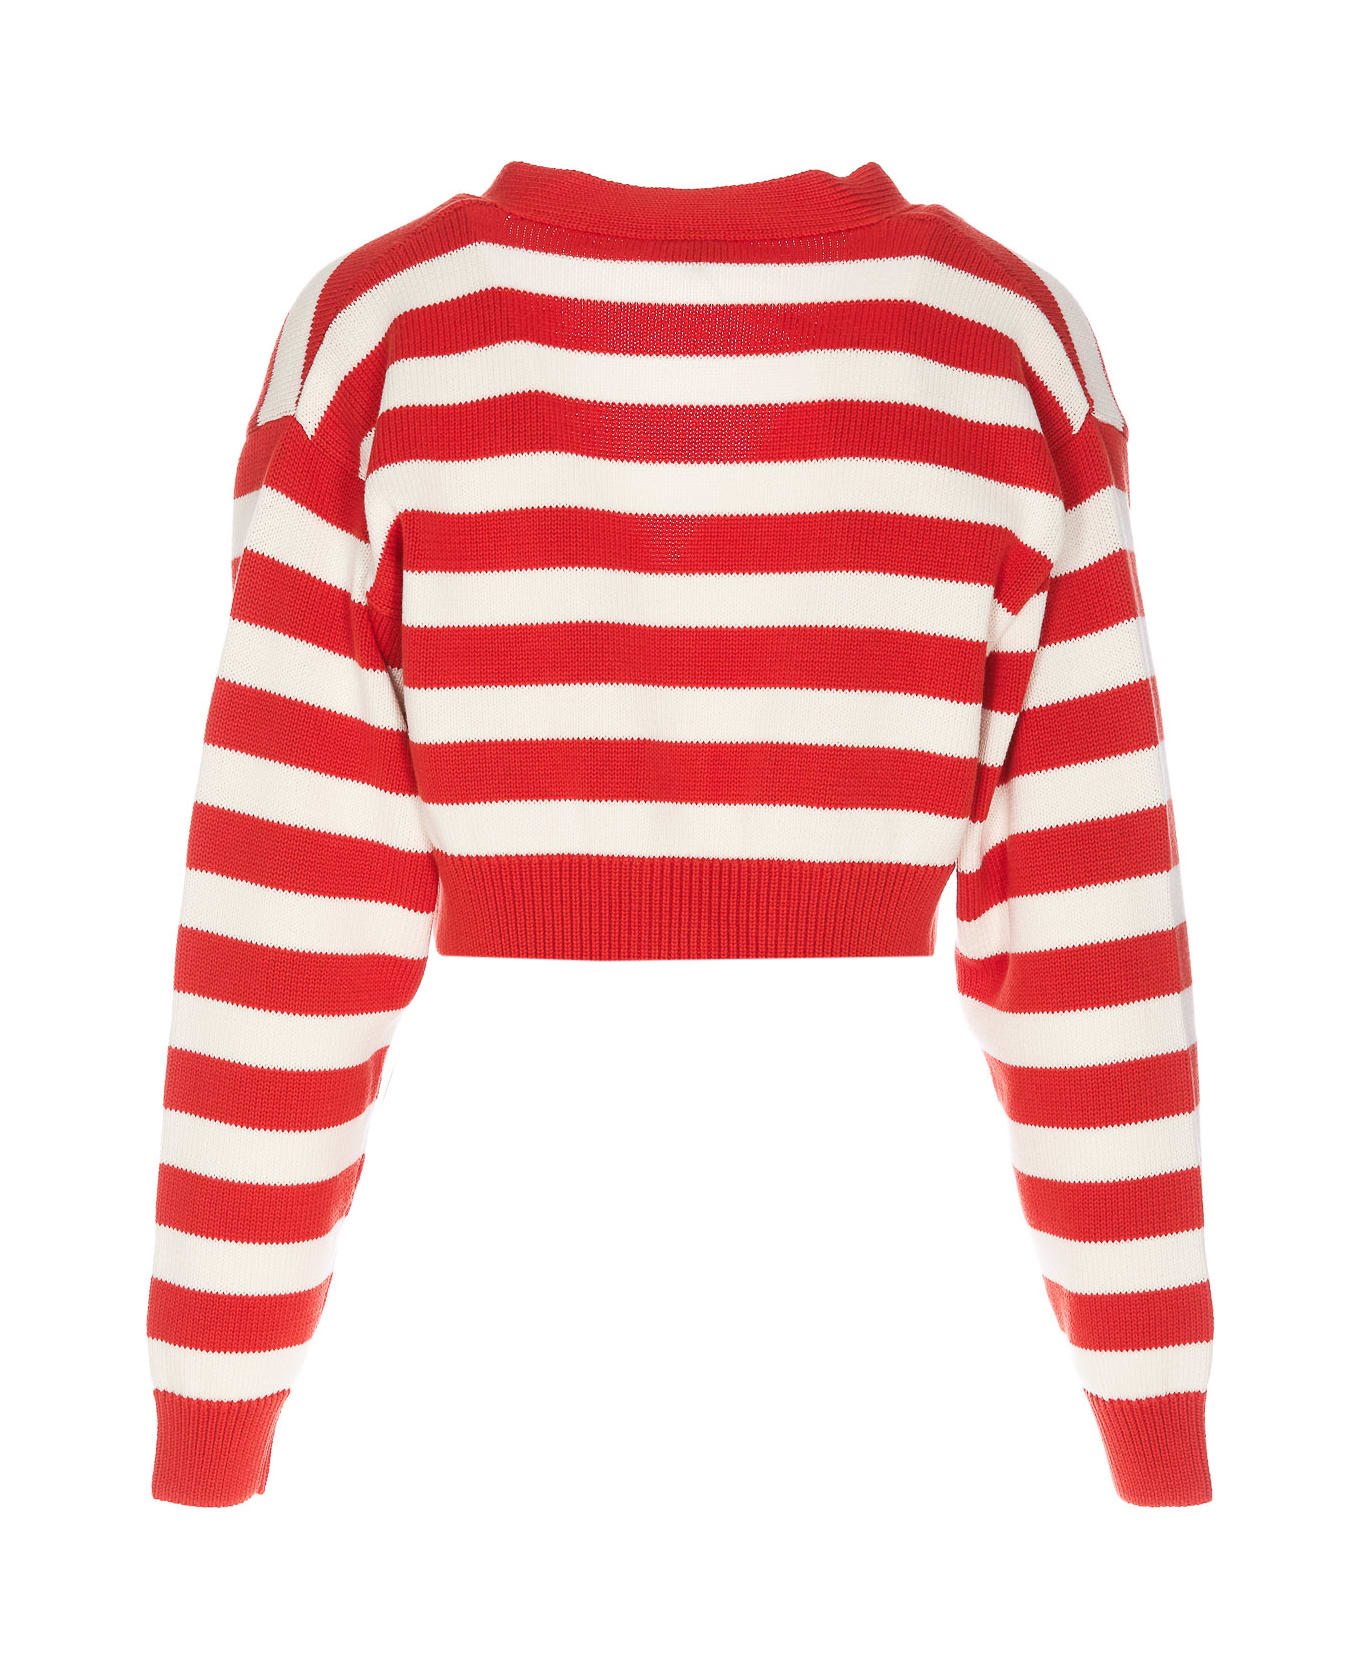 Kenzo Nautical Striped Cardigan - RED